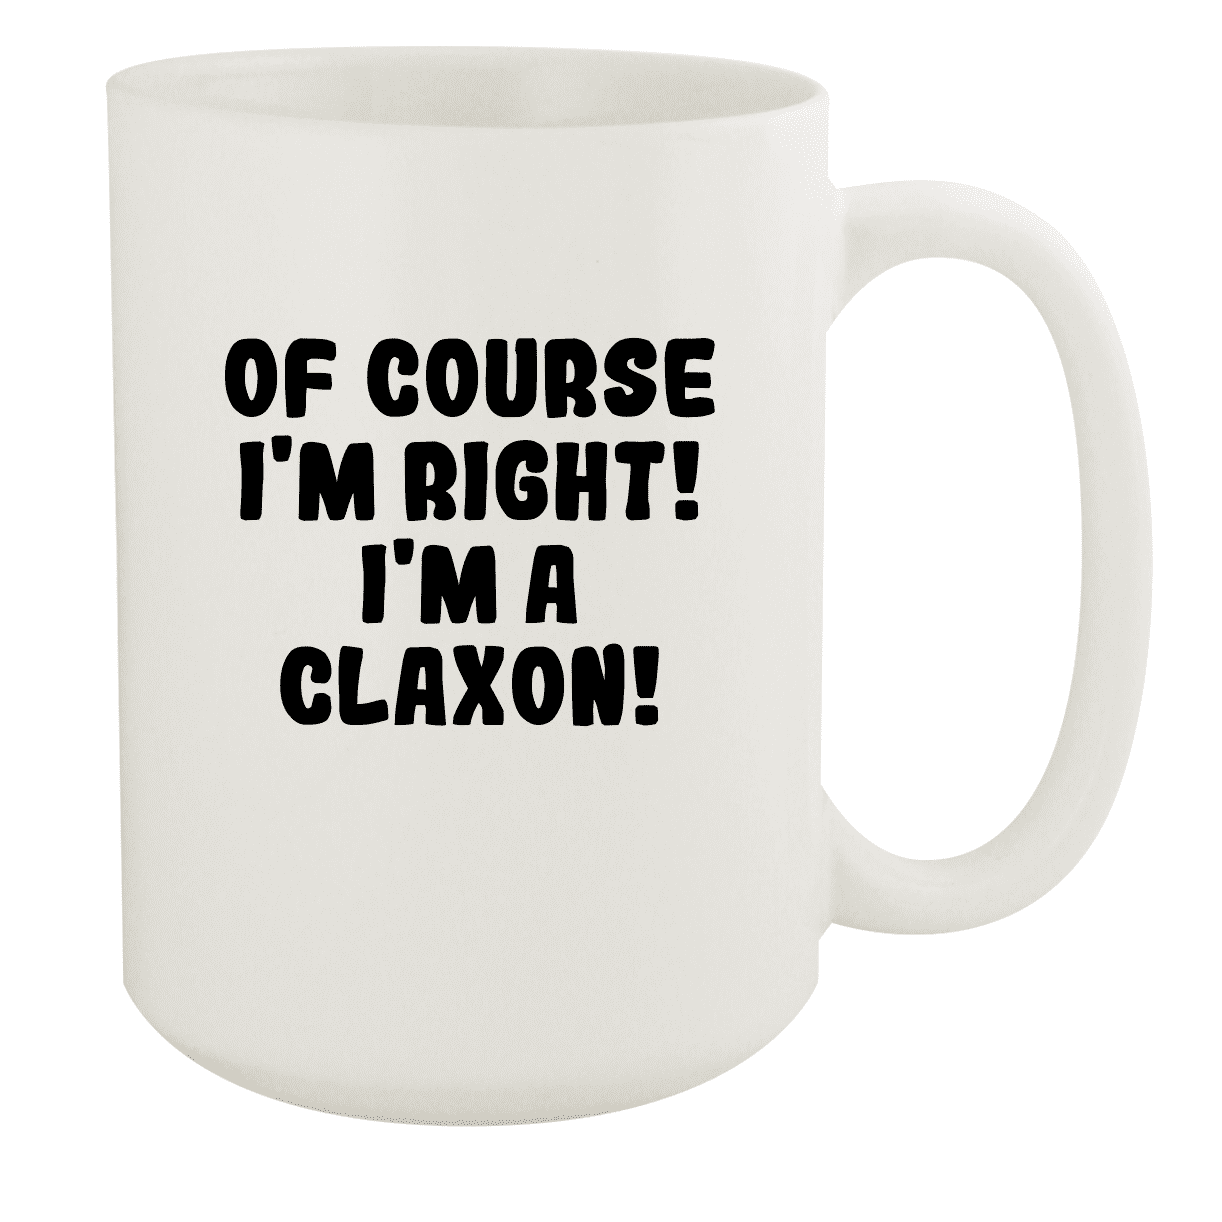 Demon Play discord Goodwill Of Course I'm Right! I'm A Claxon! - Ceramic 15oz White Mug, White -  Walmart.com